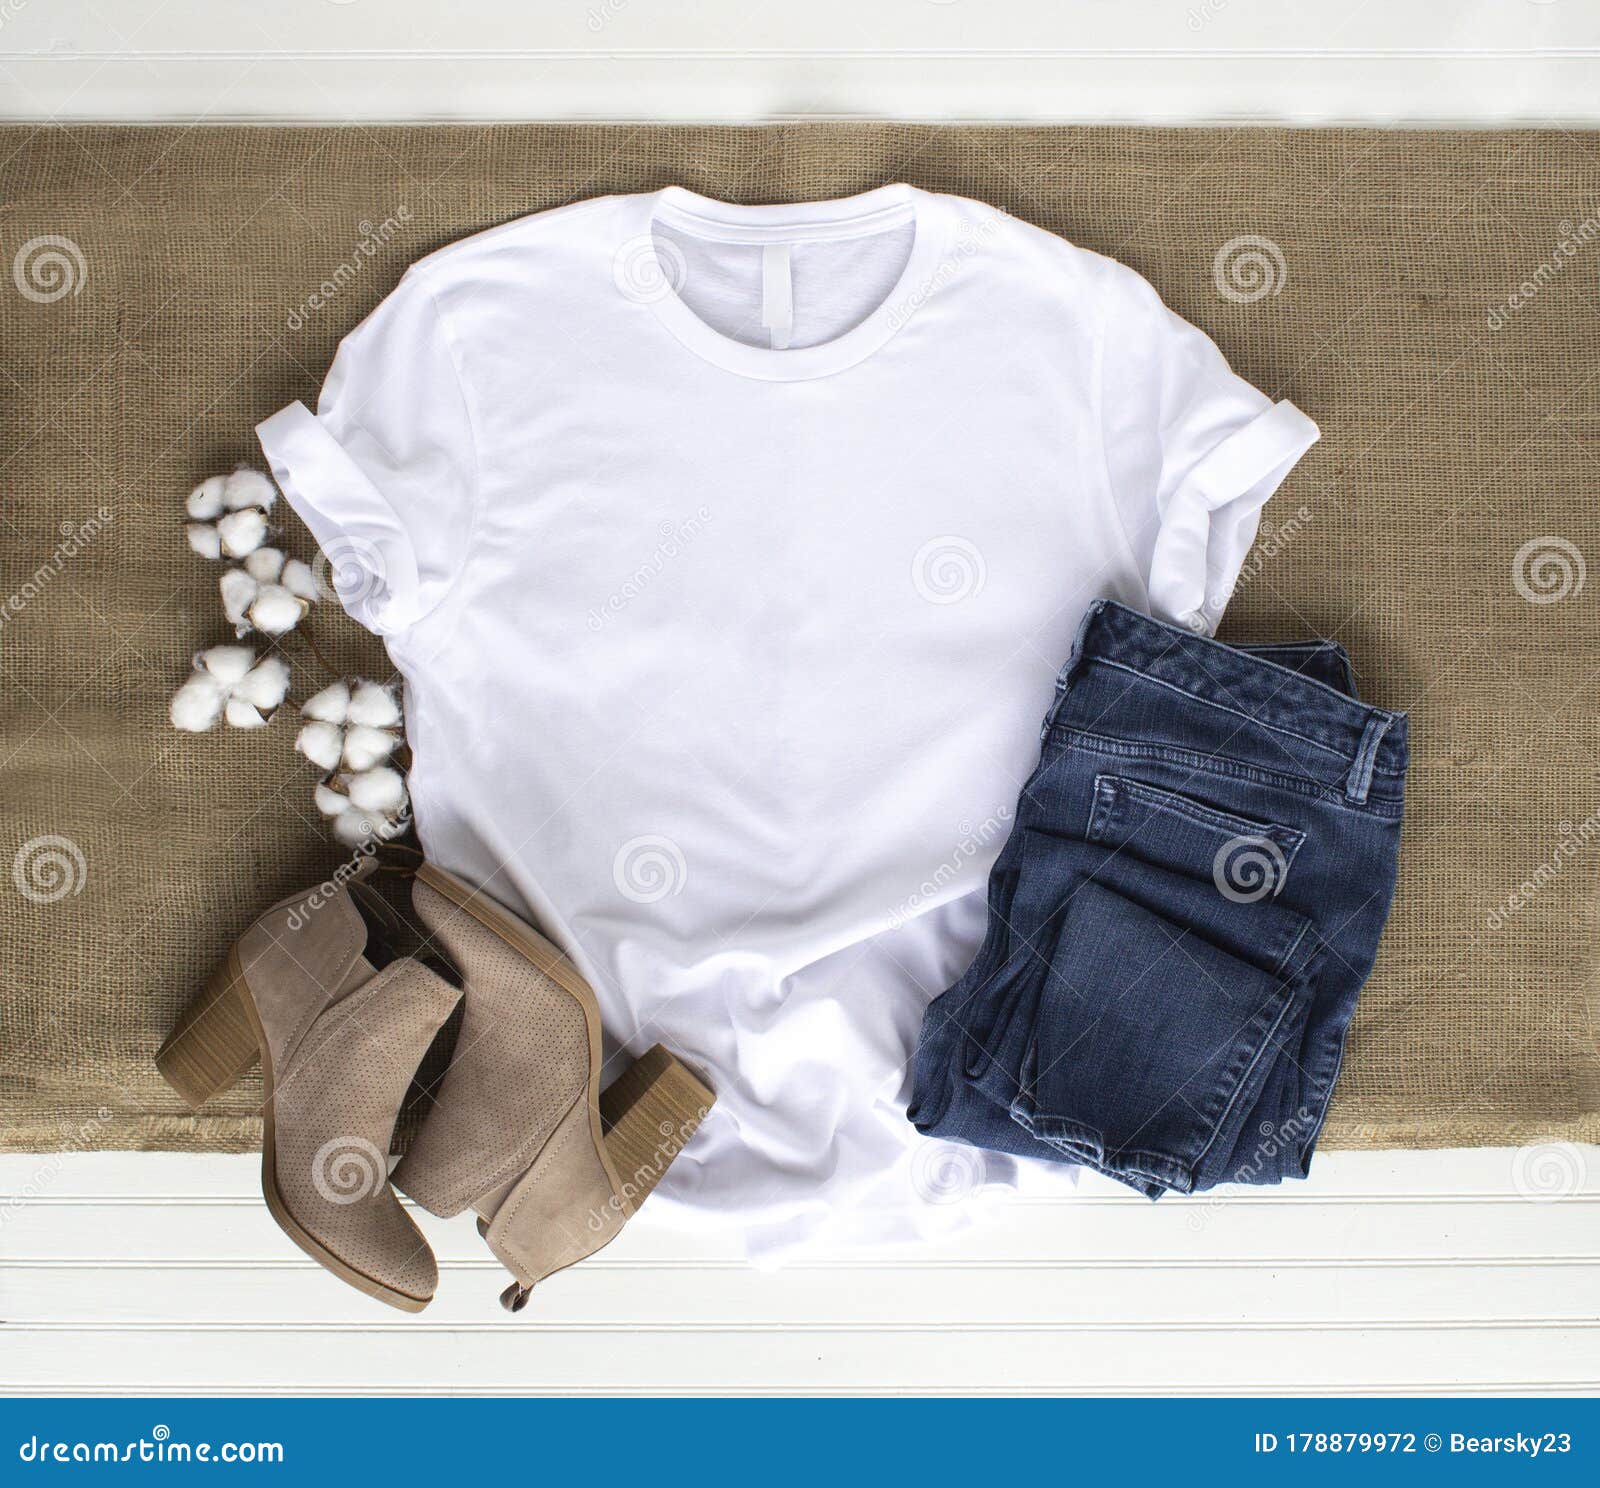 white shirt mockup - tshirt with cotton plant, burlap, boots & jeans